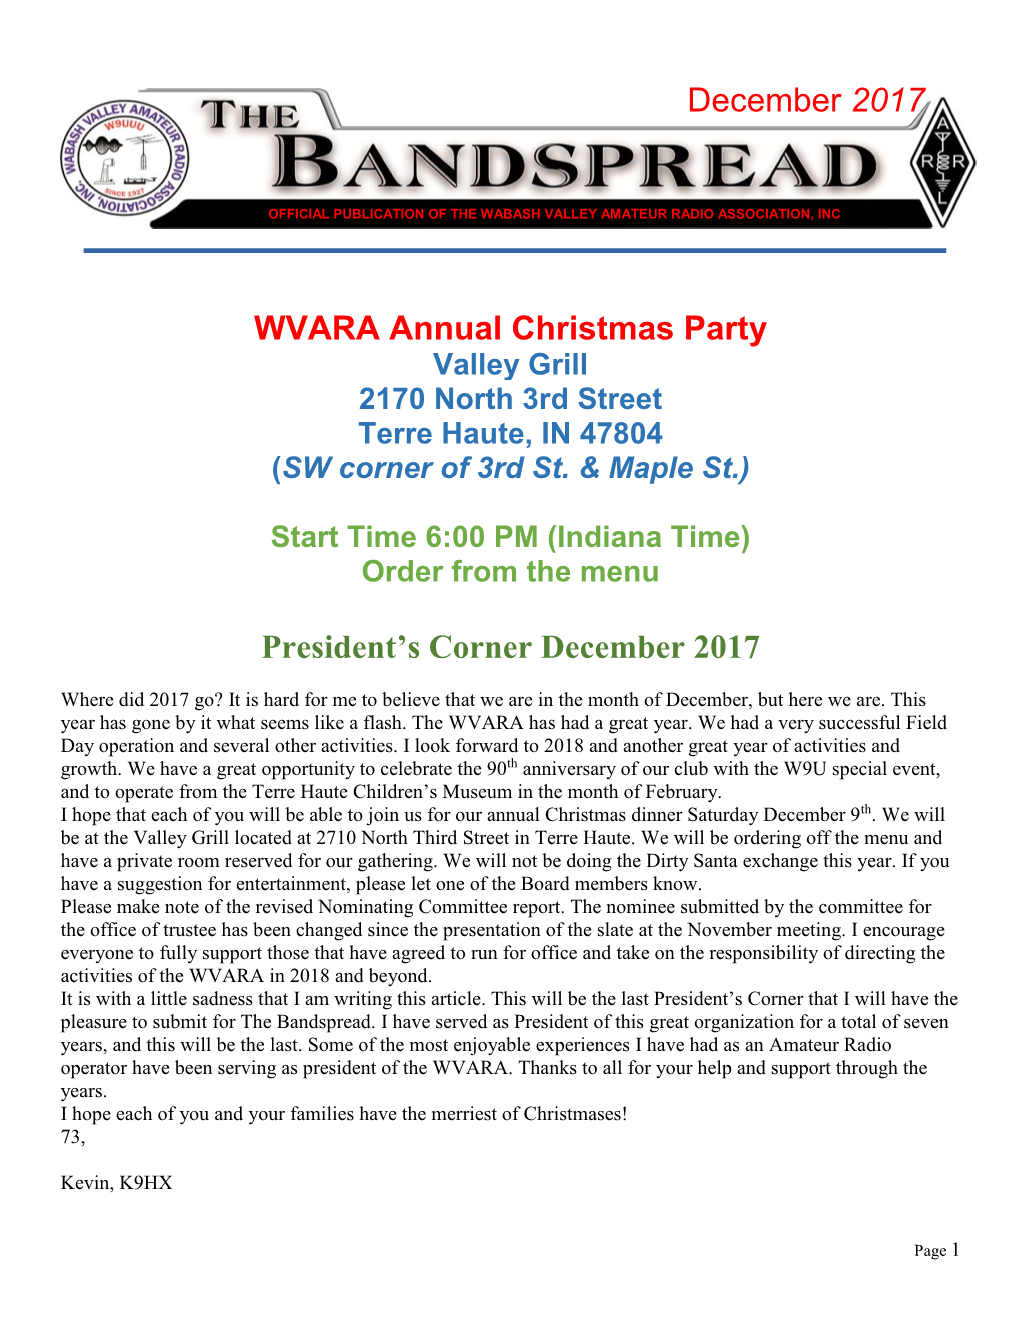 December 2017 WVARA Annual Christmas Party President's Corner